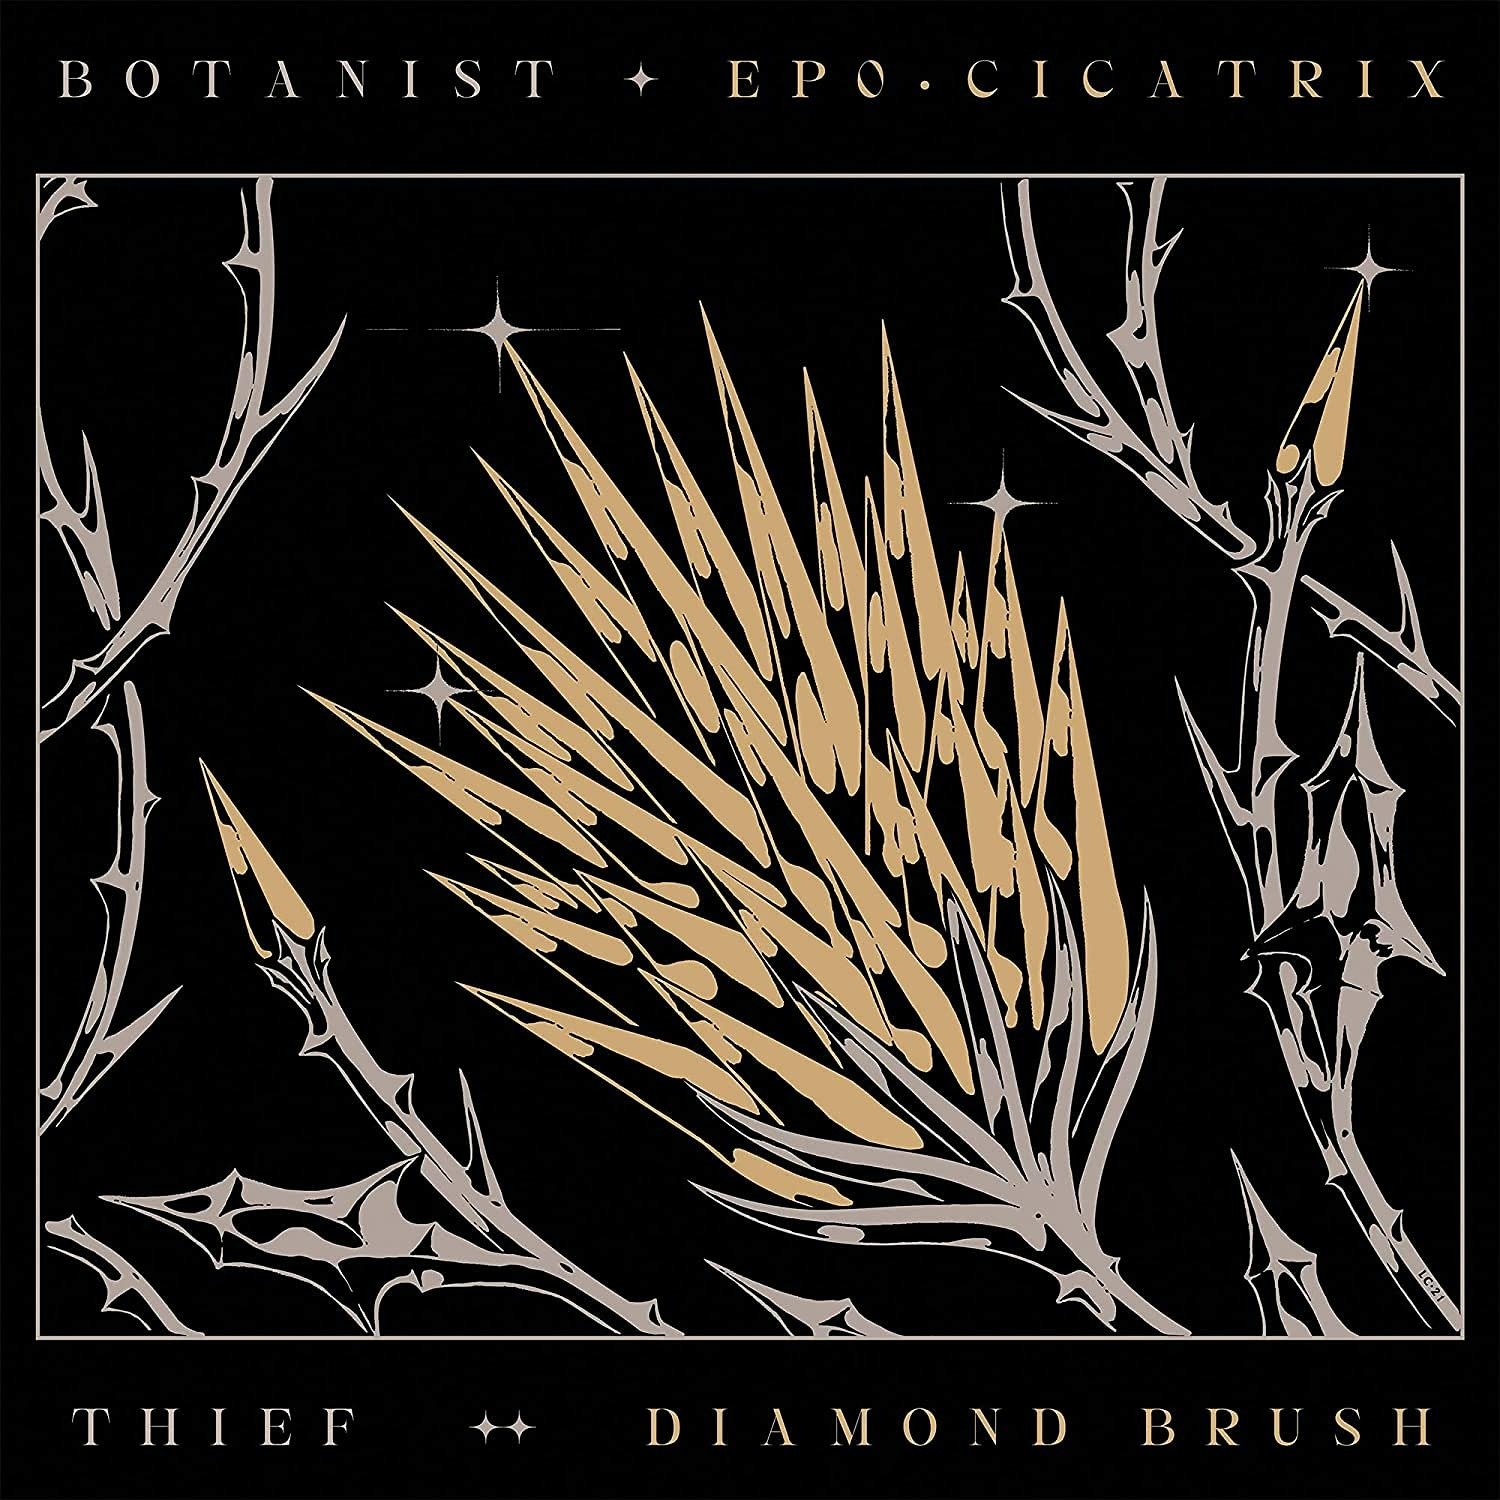 CD Shop - BOTANIST / THIEF CICATRIX / DIAMOND BRUSH